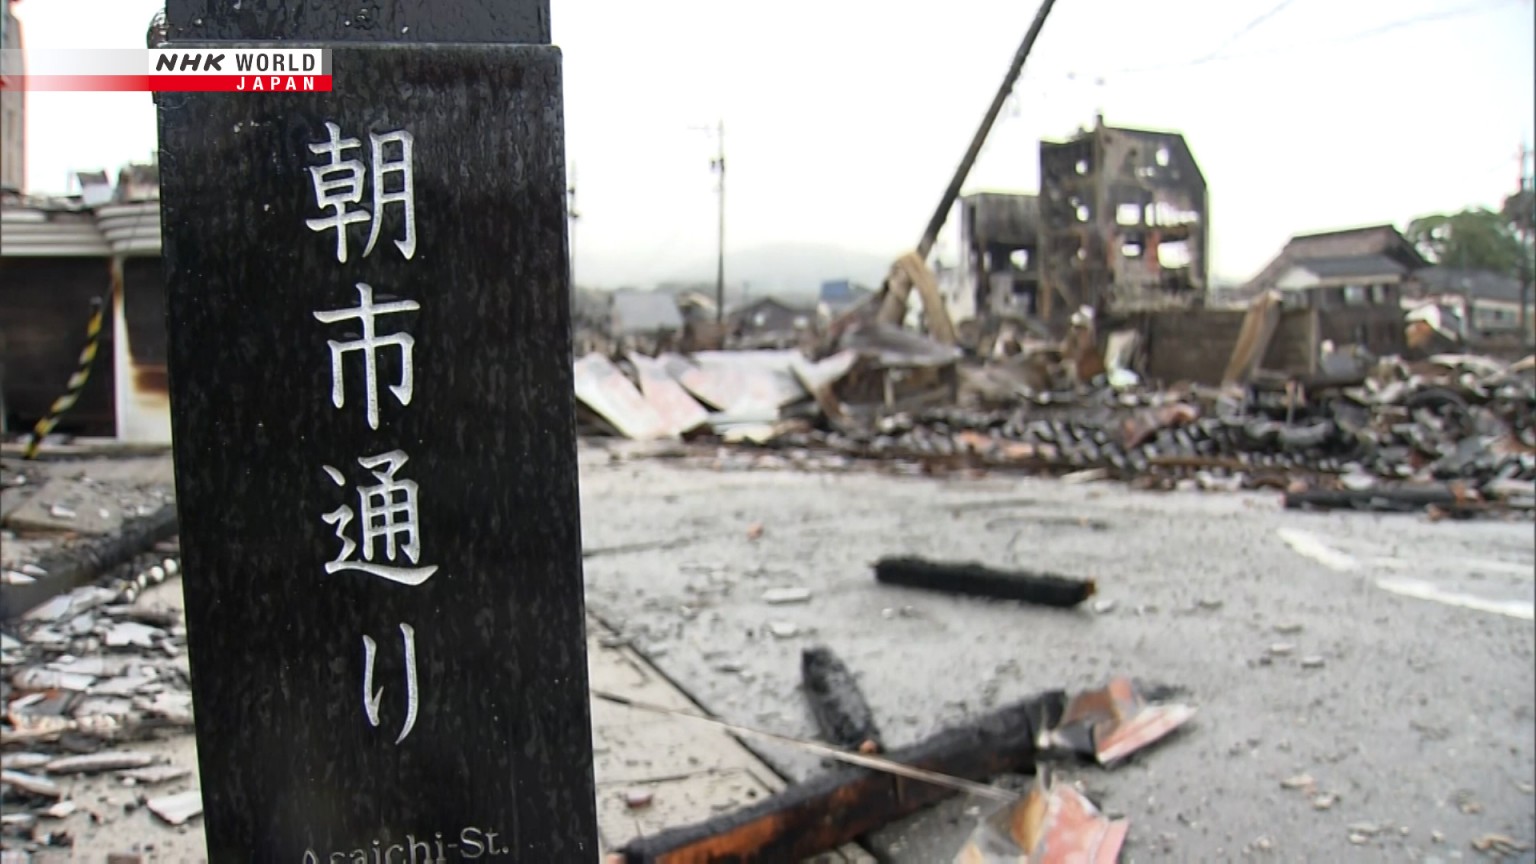 Japan earthquake: Fire burns down Wajima's Asaichi Street in 